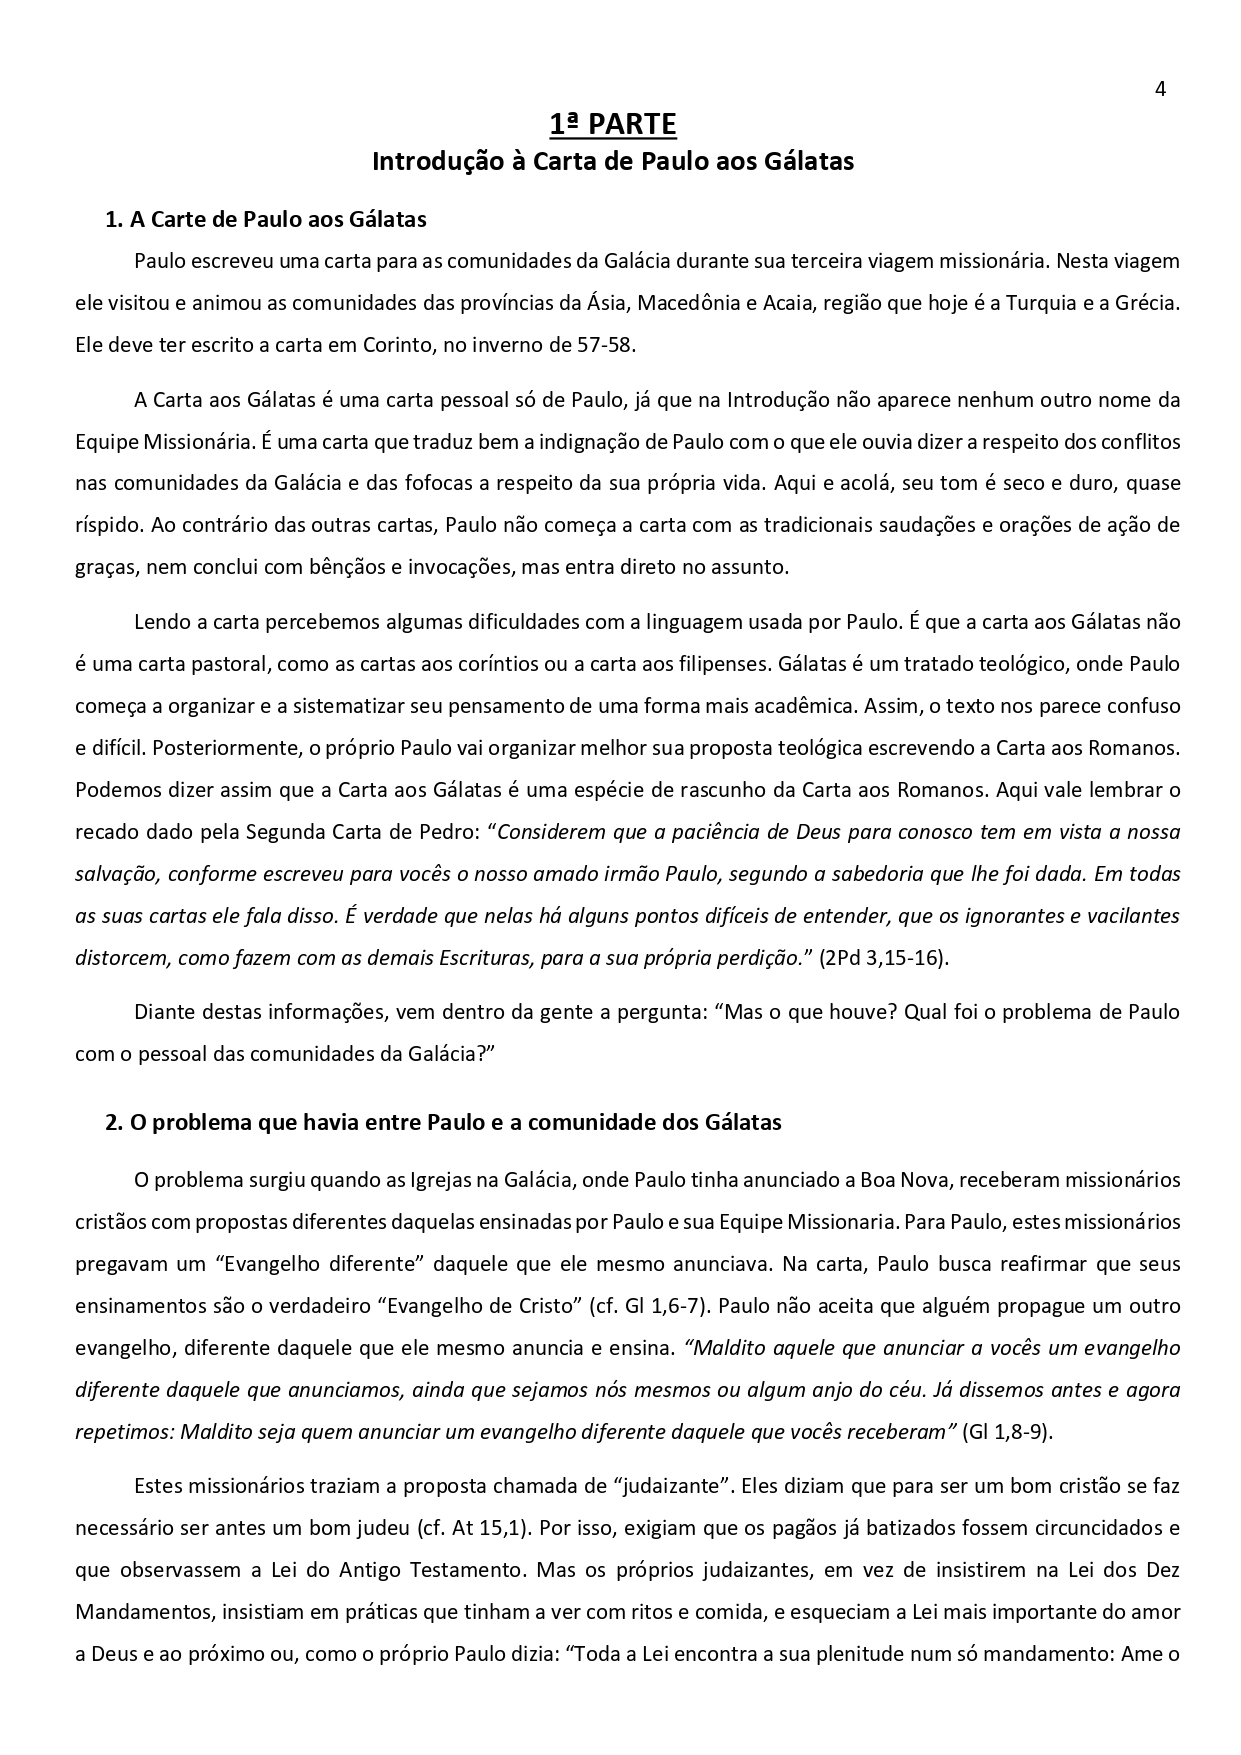 Carta aos Galatas Mesters Orofino convertido page 0004